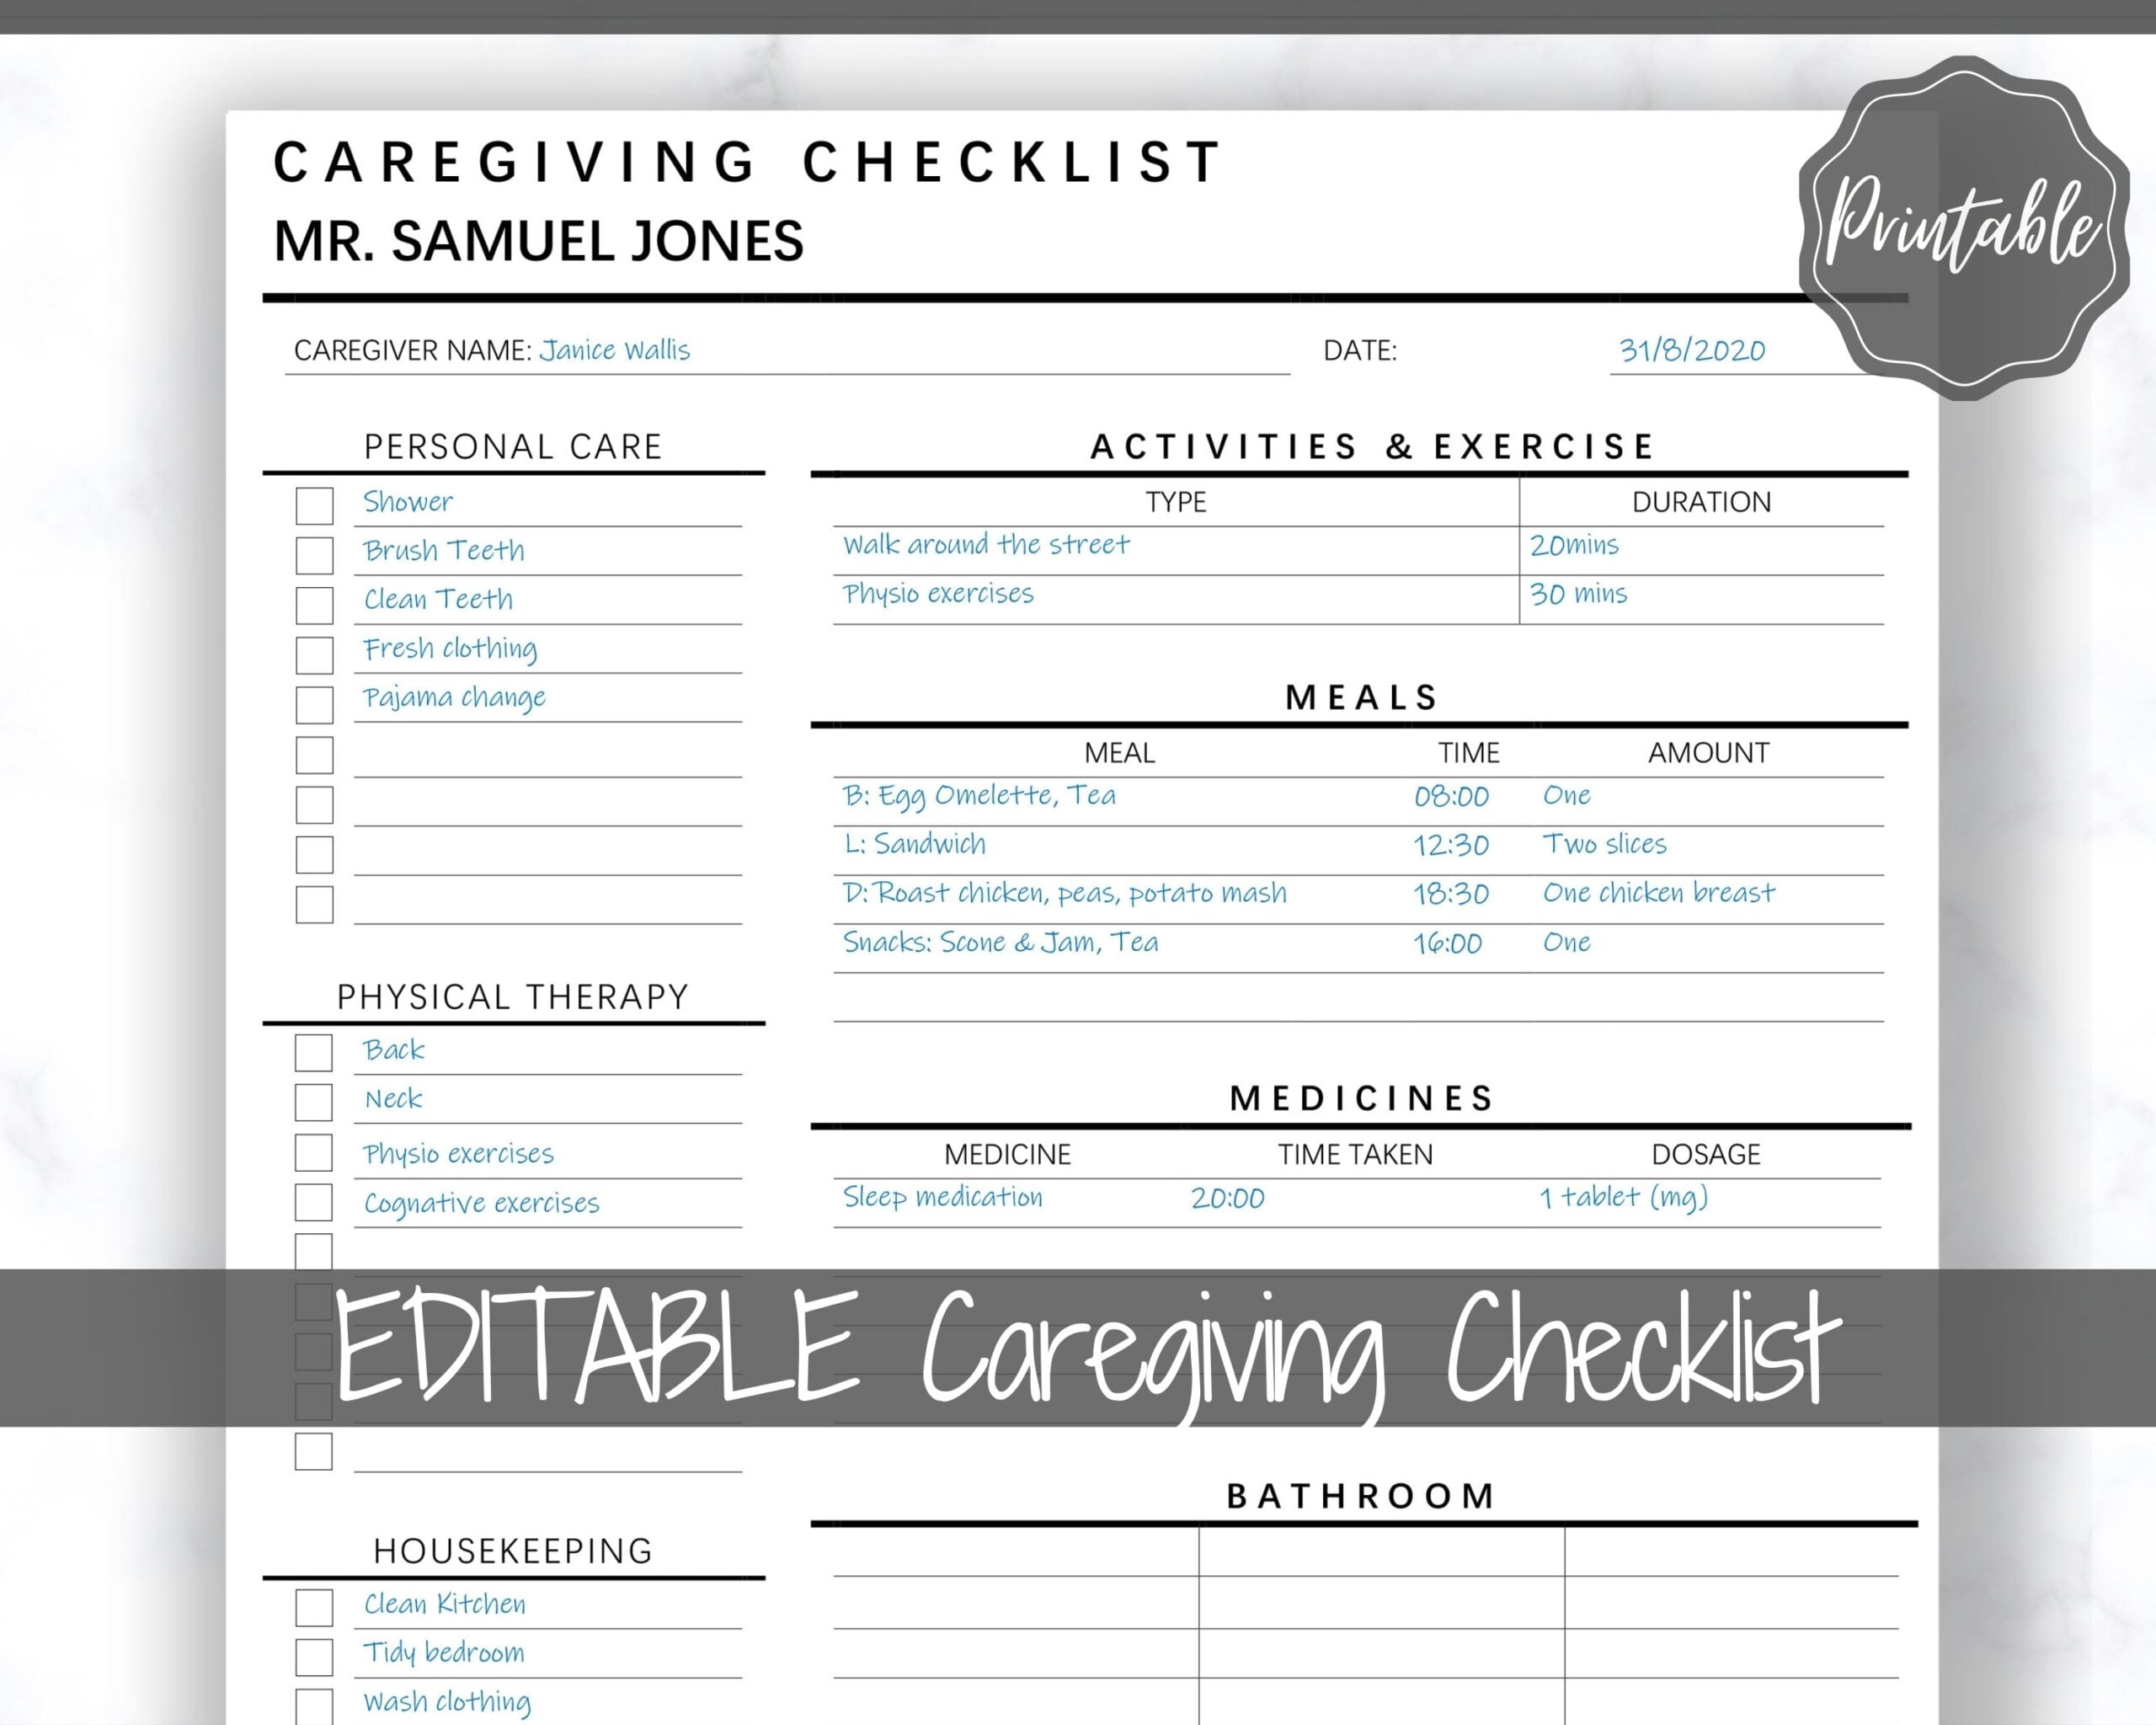 Caregiving Elderly Care Checklist EDITABLE Printable Is Ideal Etsy sterreich